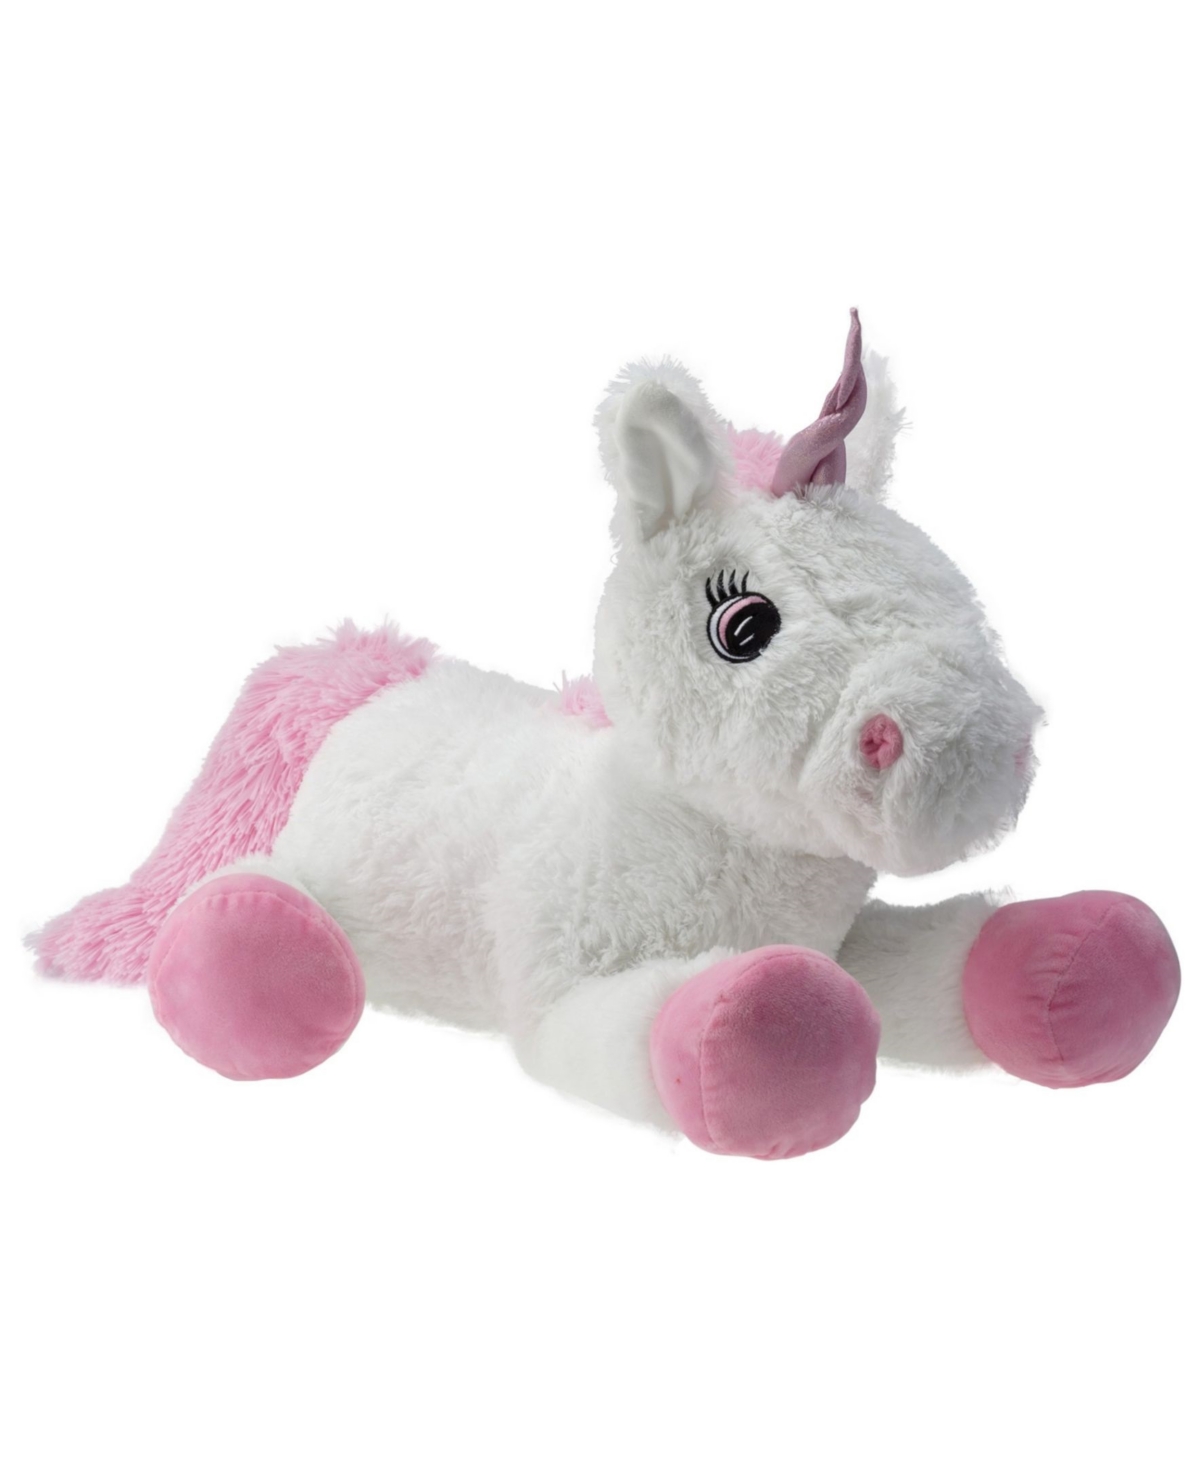 First & Main Pioupiou 30" Giant Plush Unicorn Stuffed Animal In Multi